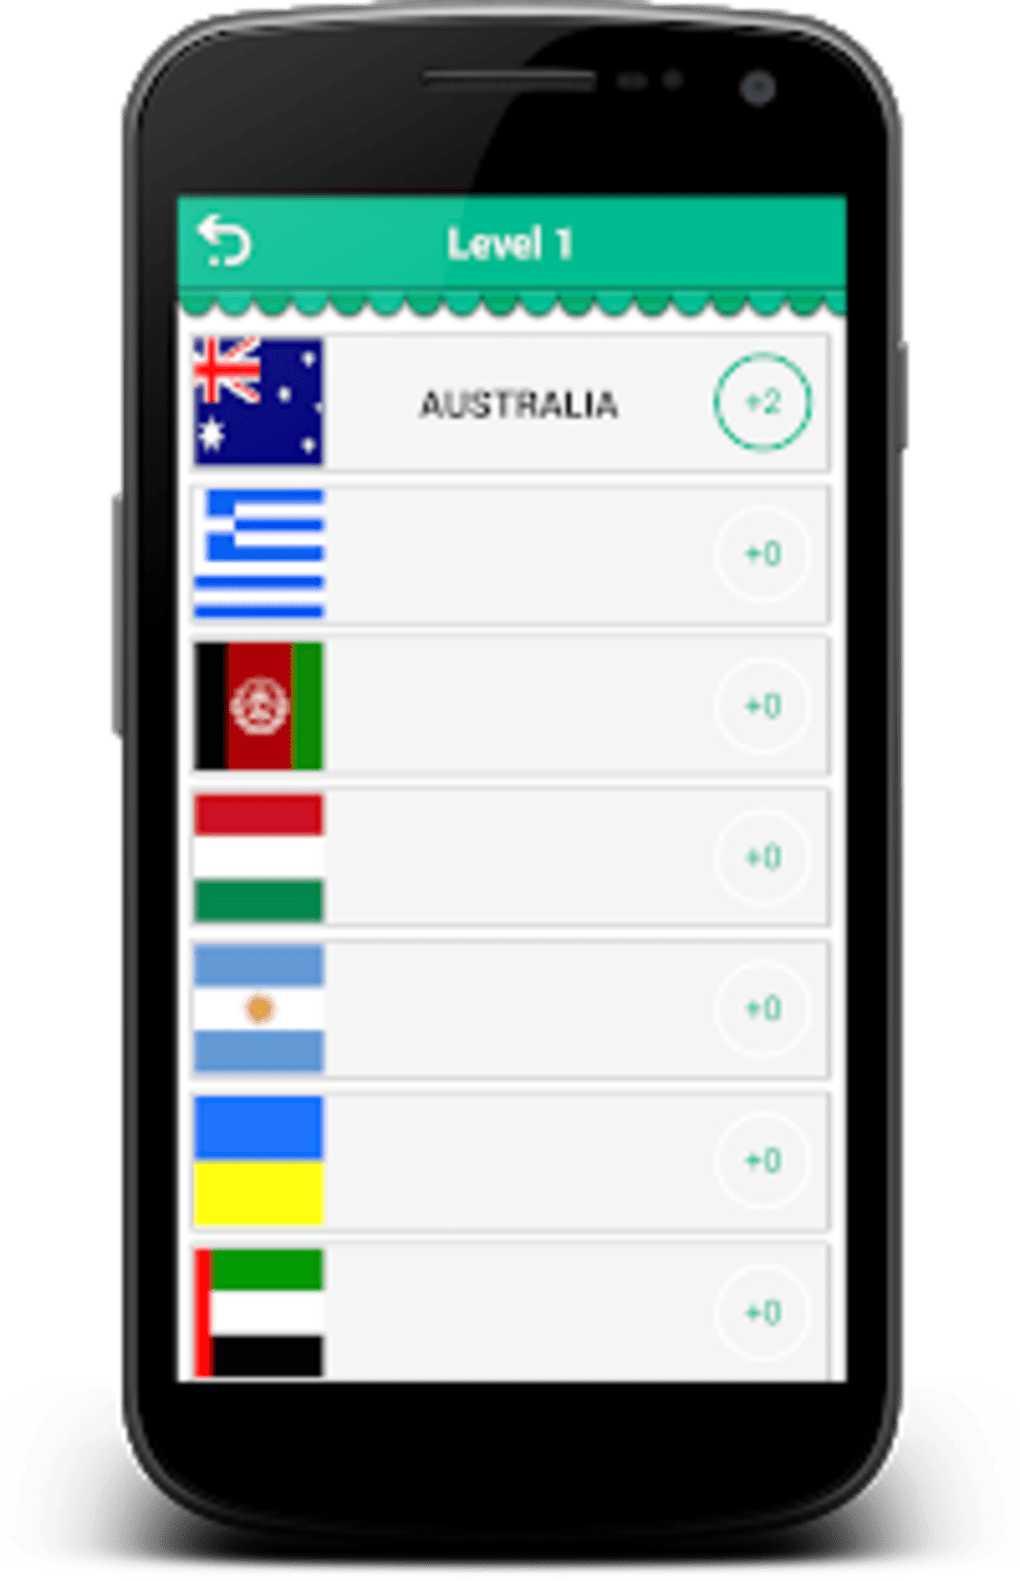 Logo Quiz World - Apps on Google Play